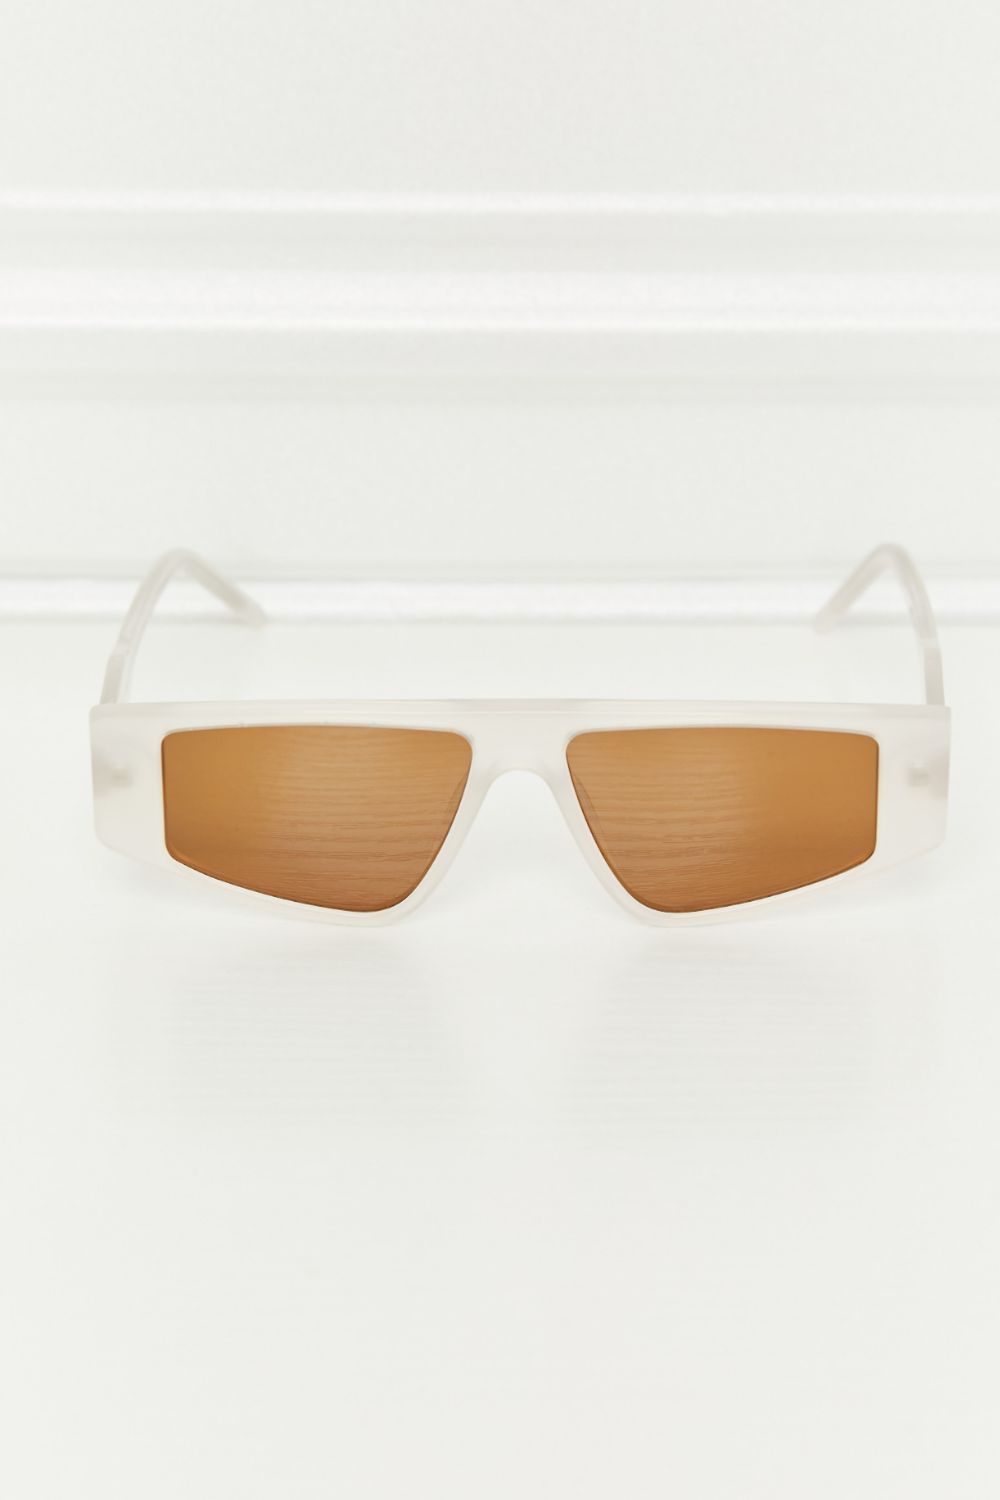 Geometric TAC Polarization Lens Sunglasses Print on any thing USA/STOD clothes